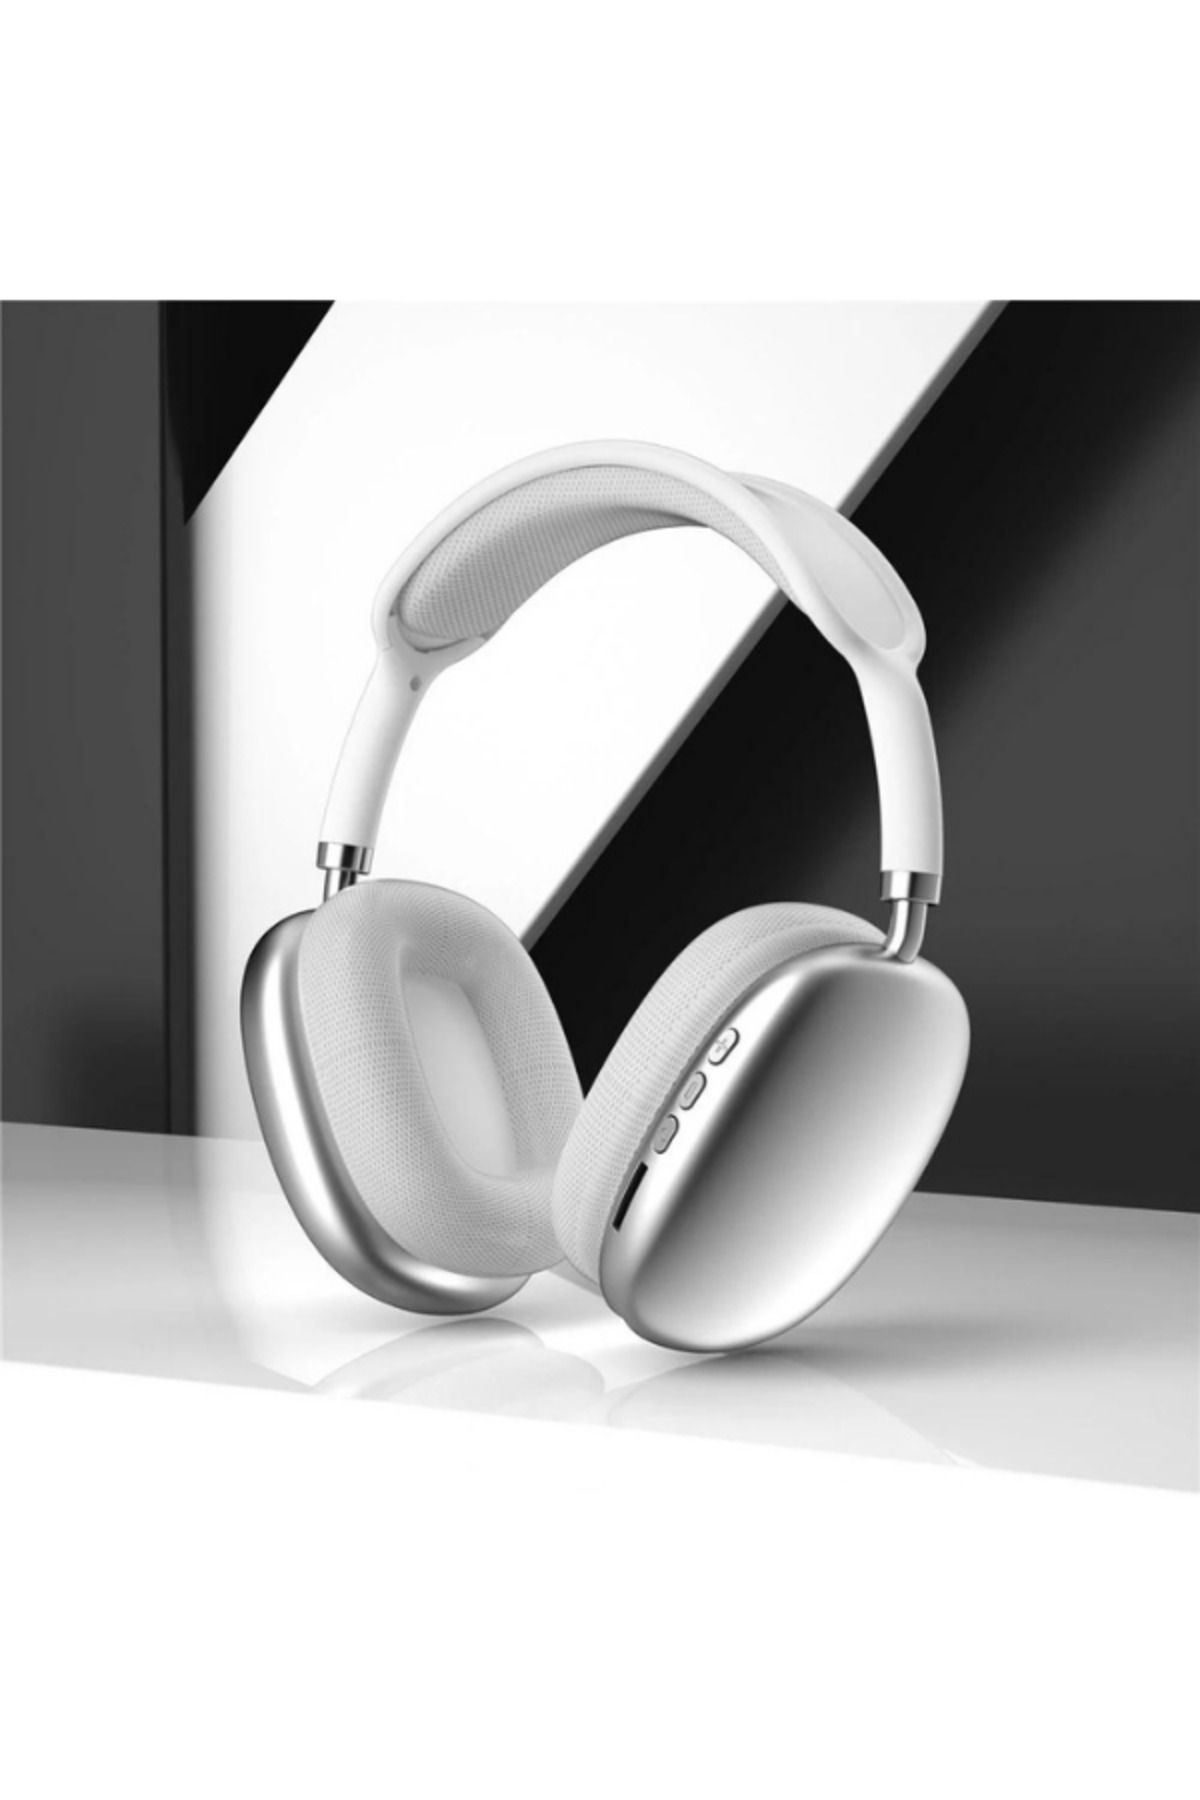 OWWOTECH PRO MAX Kablosuz Bluetooth Kulaklık Kulak Üstü, Mikrofonlu Kablosuz Kulaklık